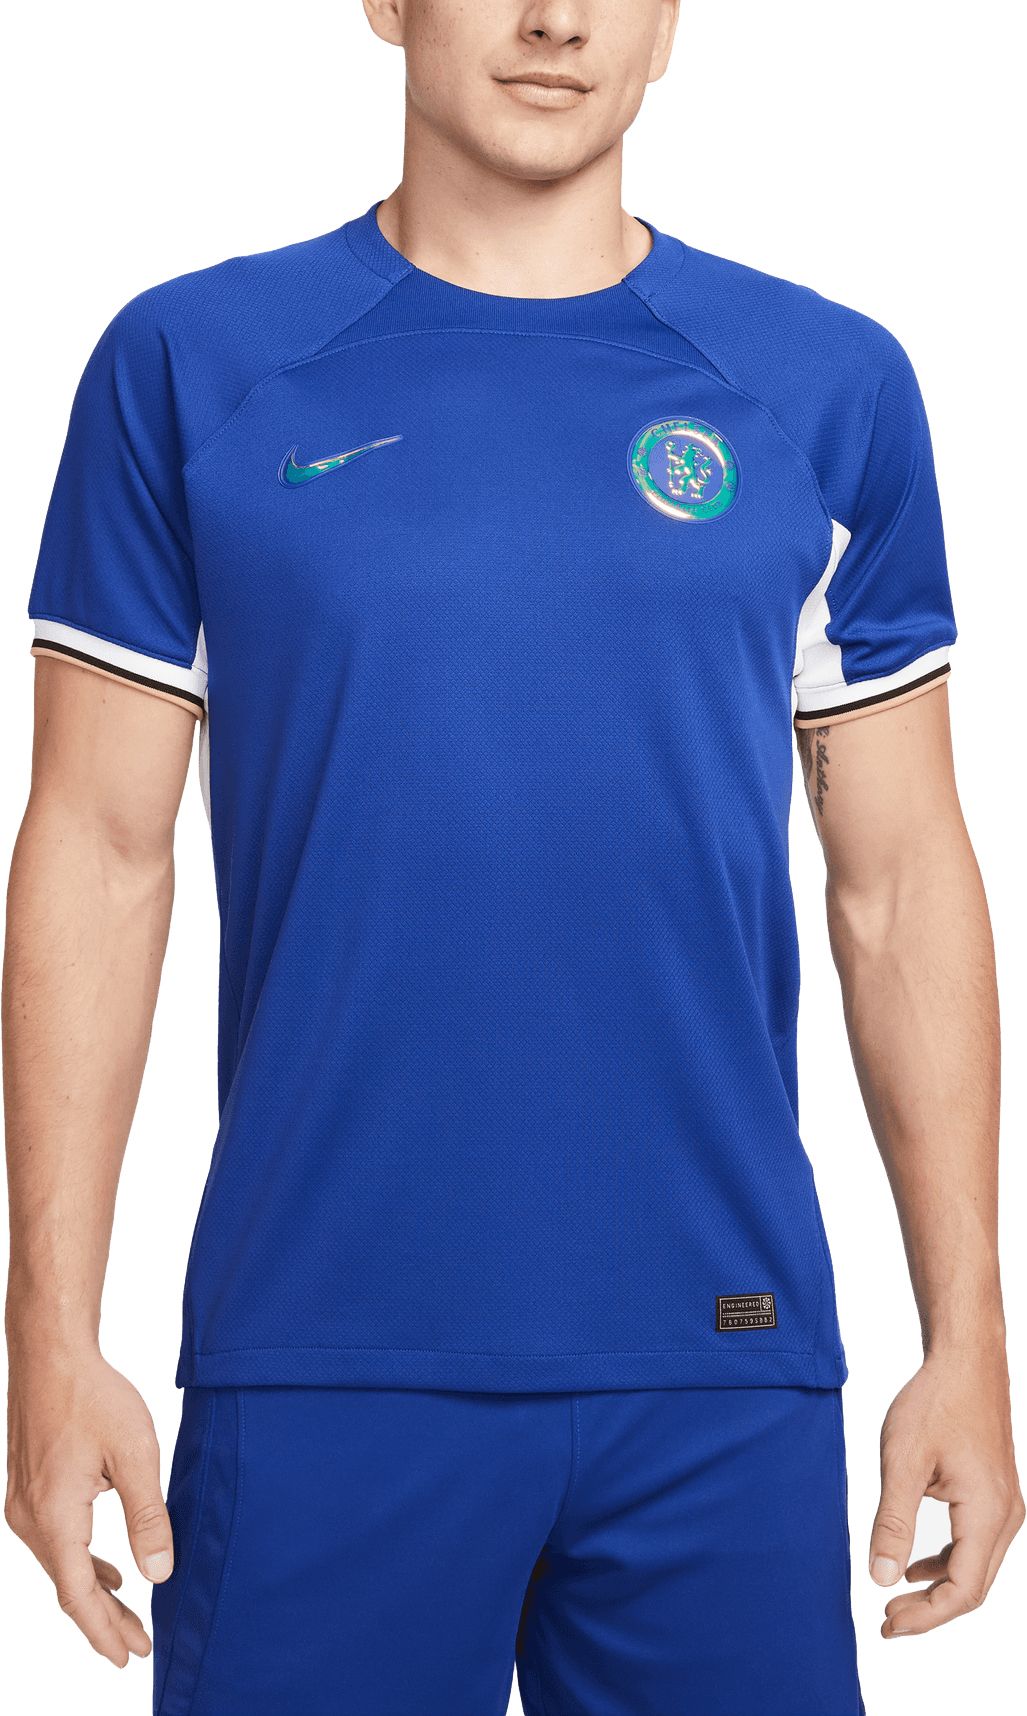 chelsea soccer team jersey